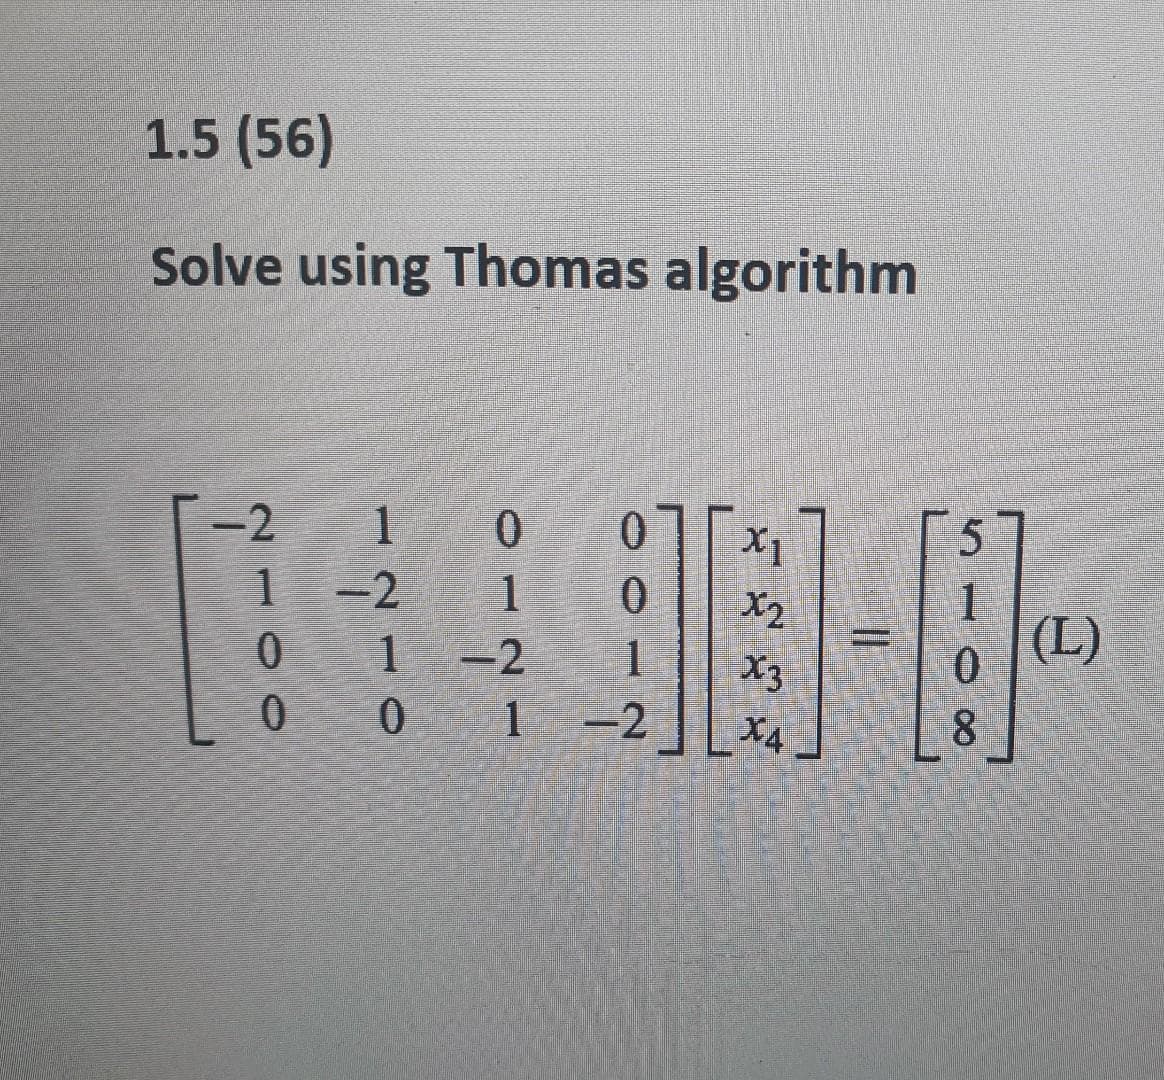 1.5 (56)
Solve using Thomas algorithm
0 X1
1
1
-2
0.
1
(L)
-2
0.
X2
1
-2
1
X3
0 1 -2 X4
8.
